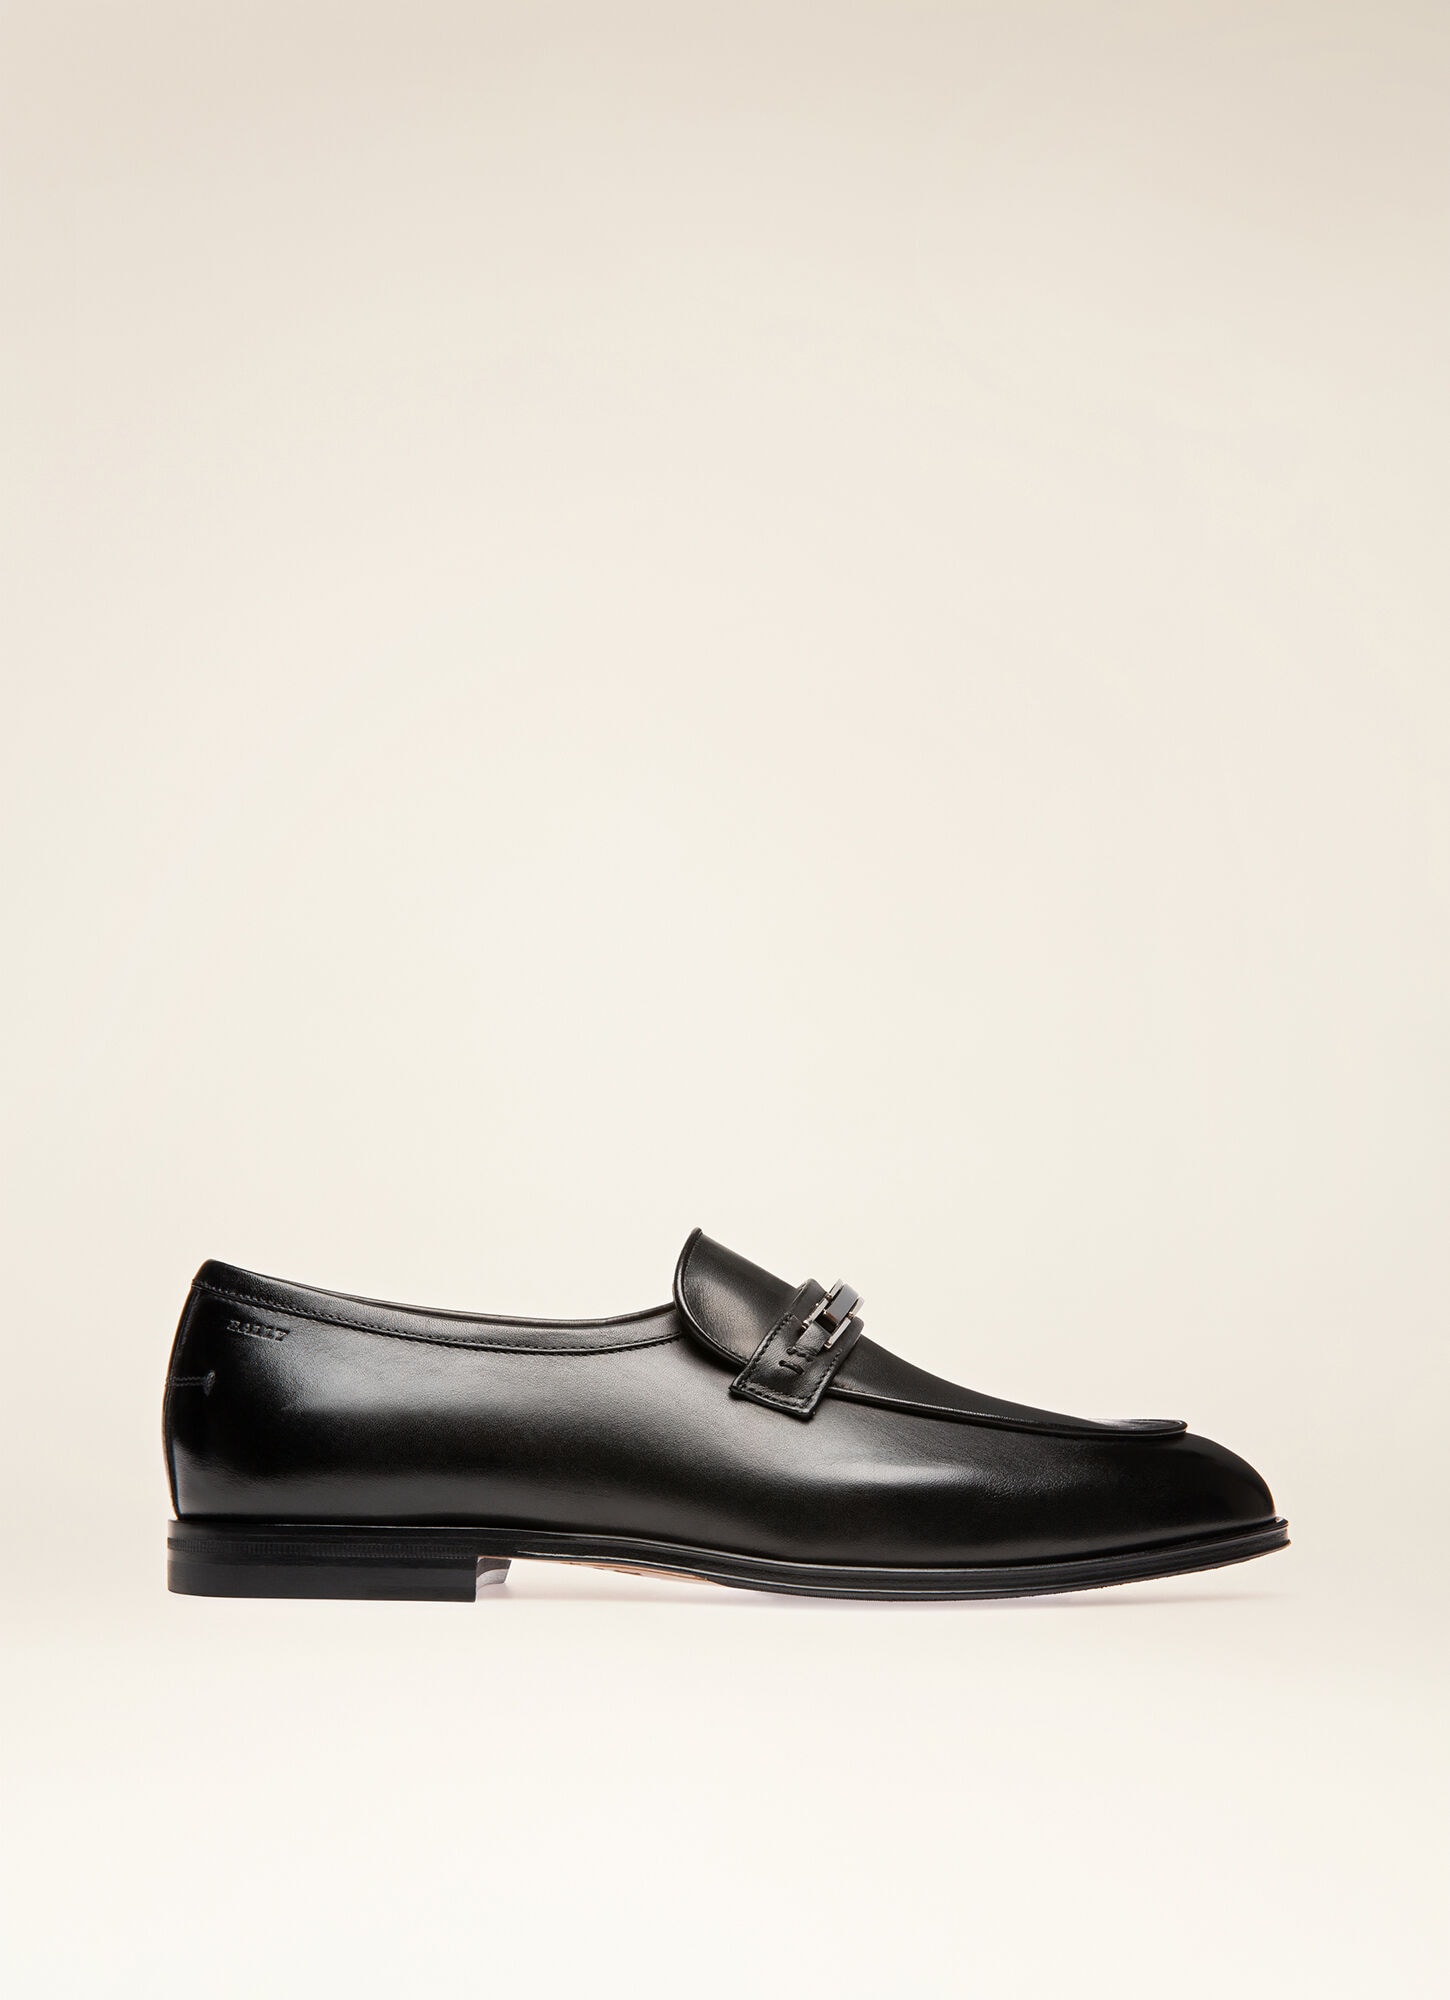 Welington| Mens Loafers | Black Leather 